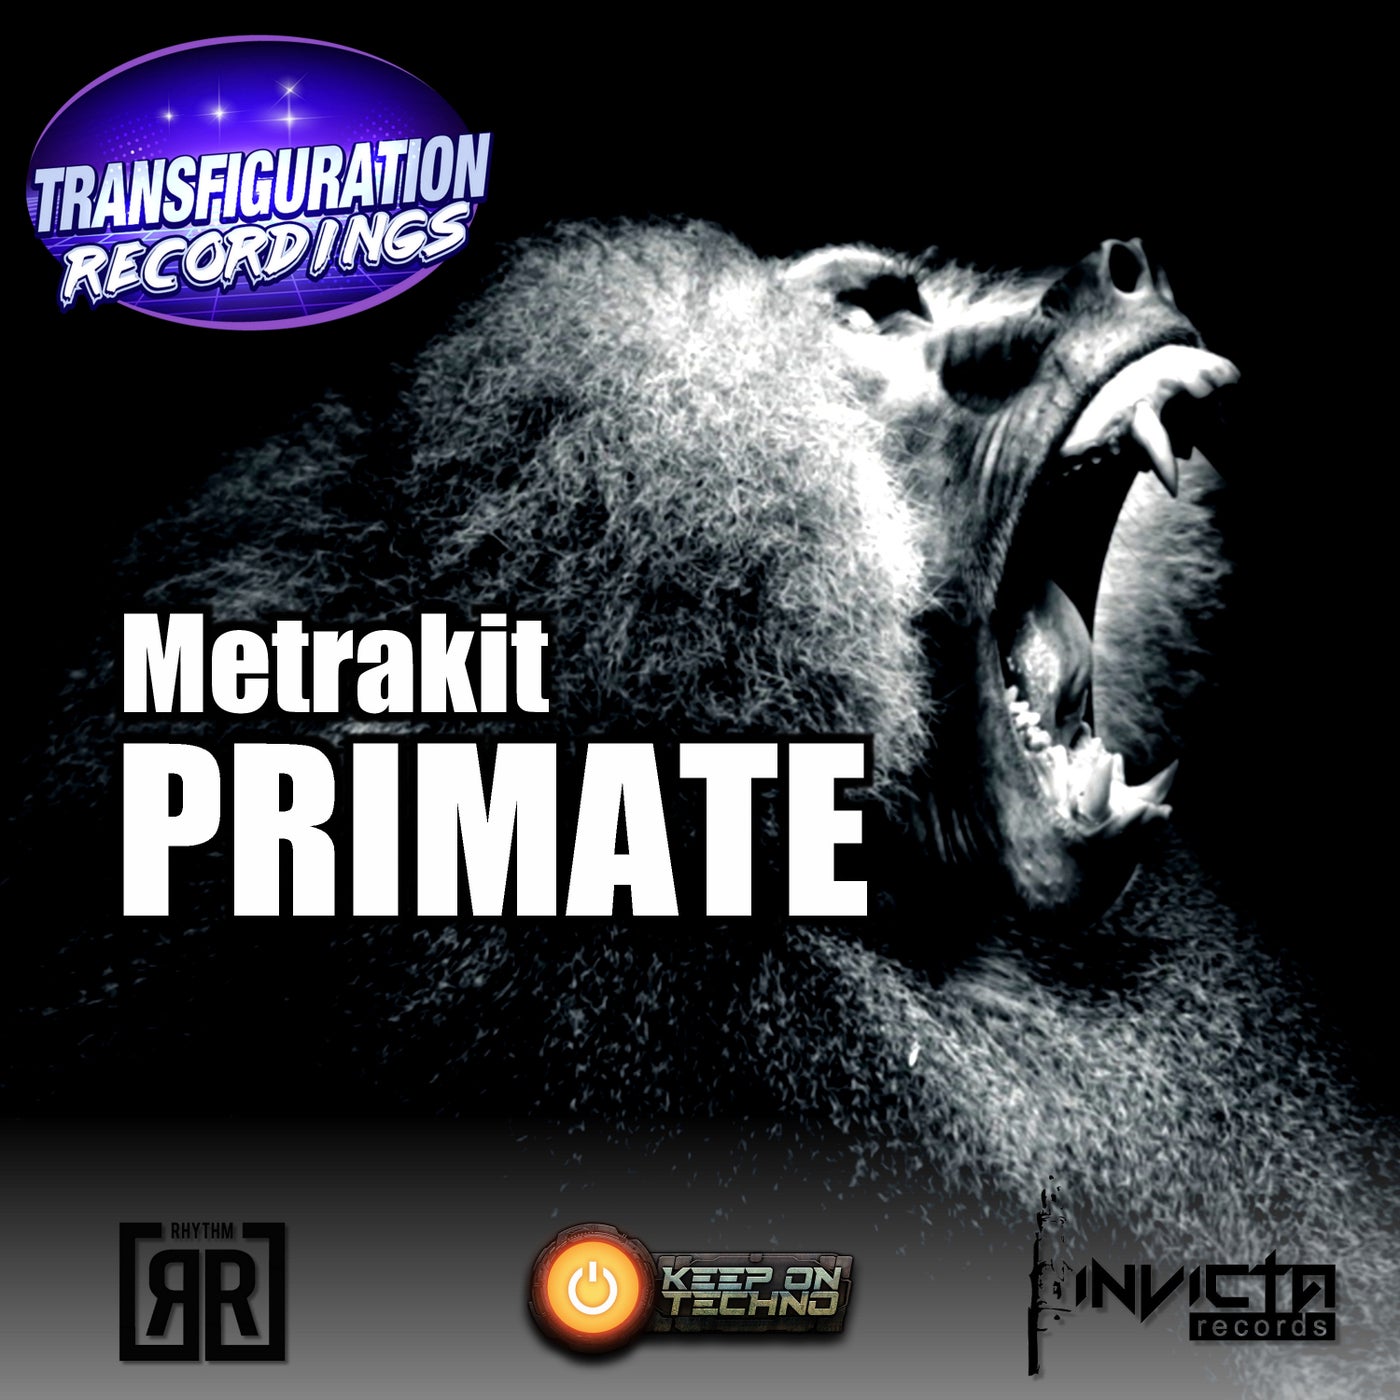 Deep Jungle from Transfiguration Recordings on Beatport